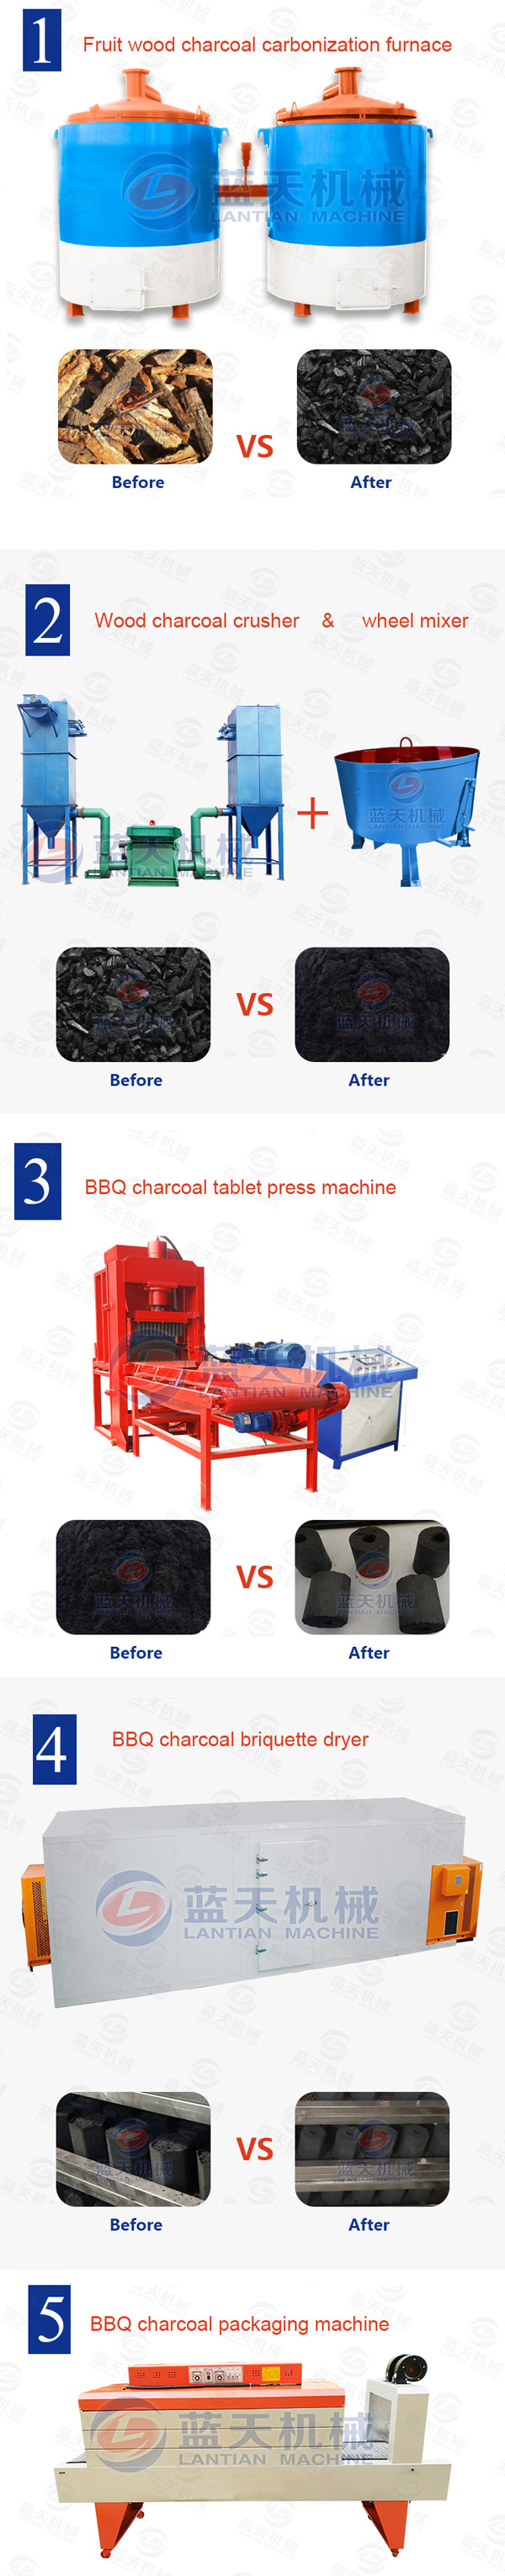 BBQ charcoal tablet pressing machine